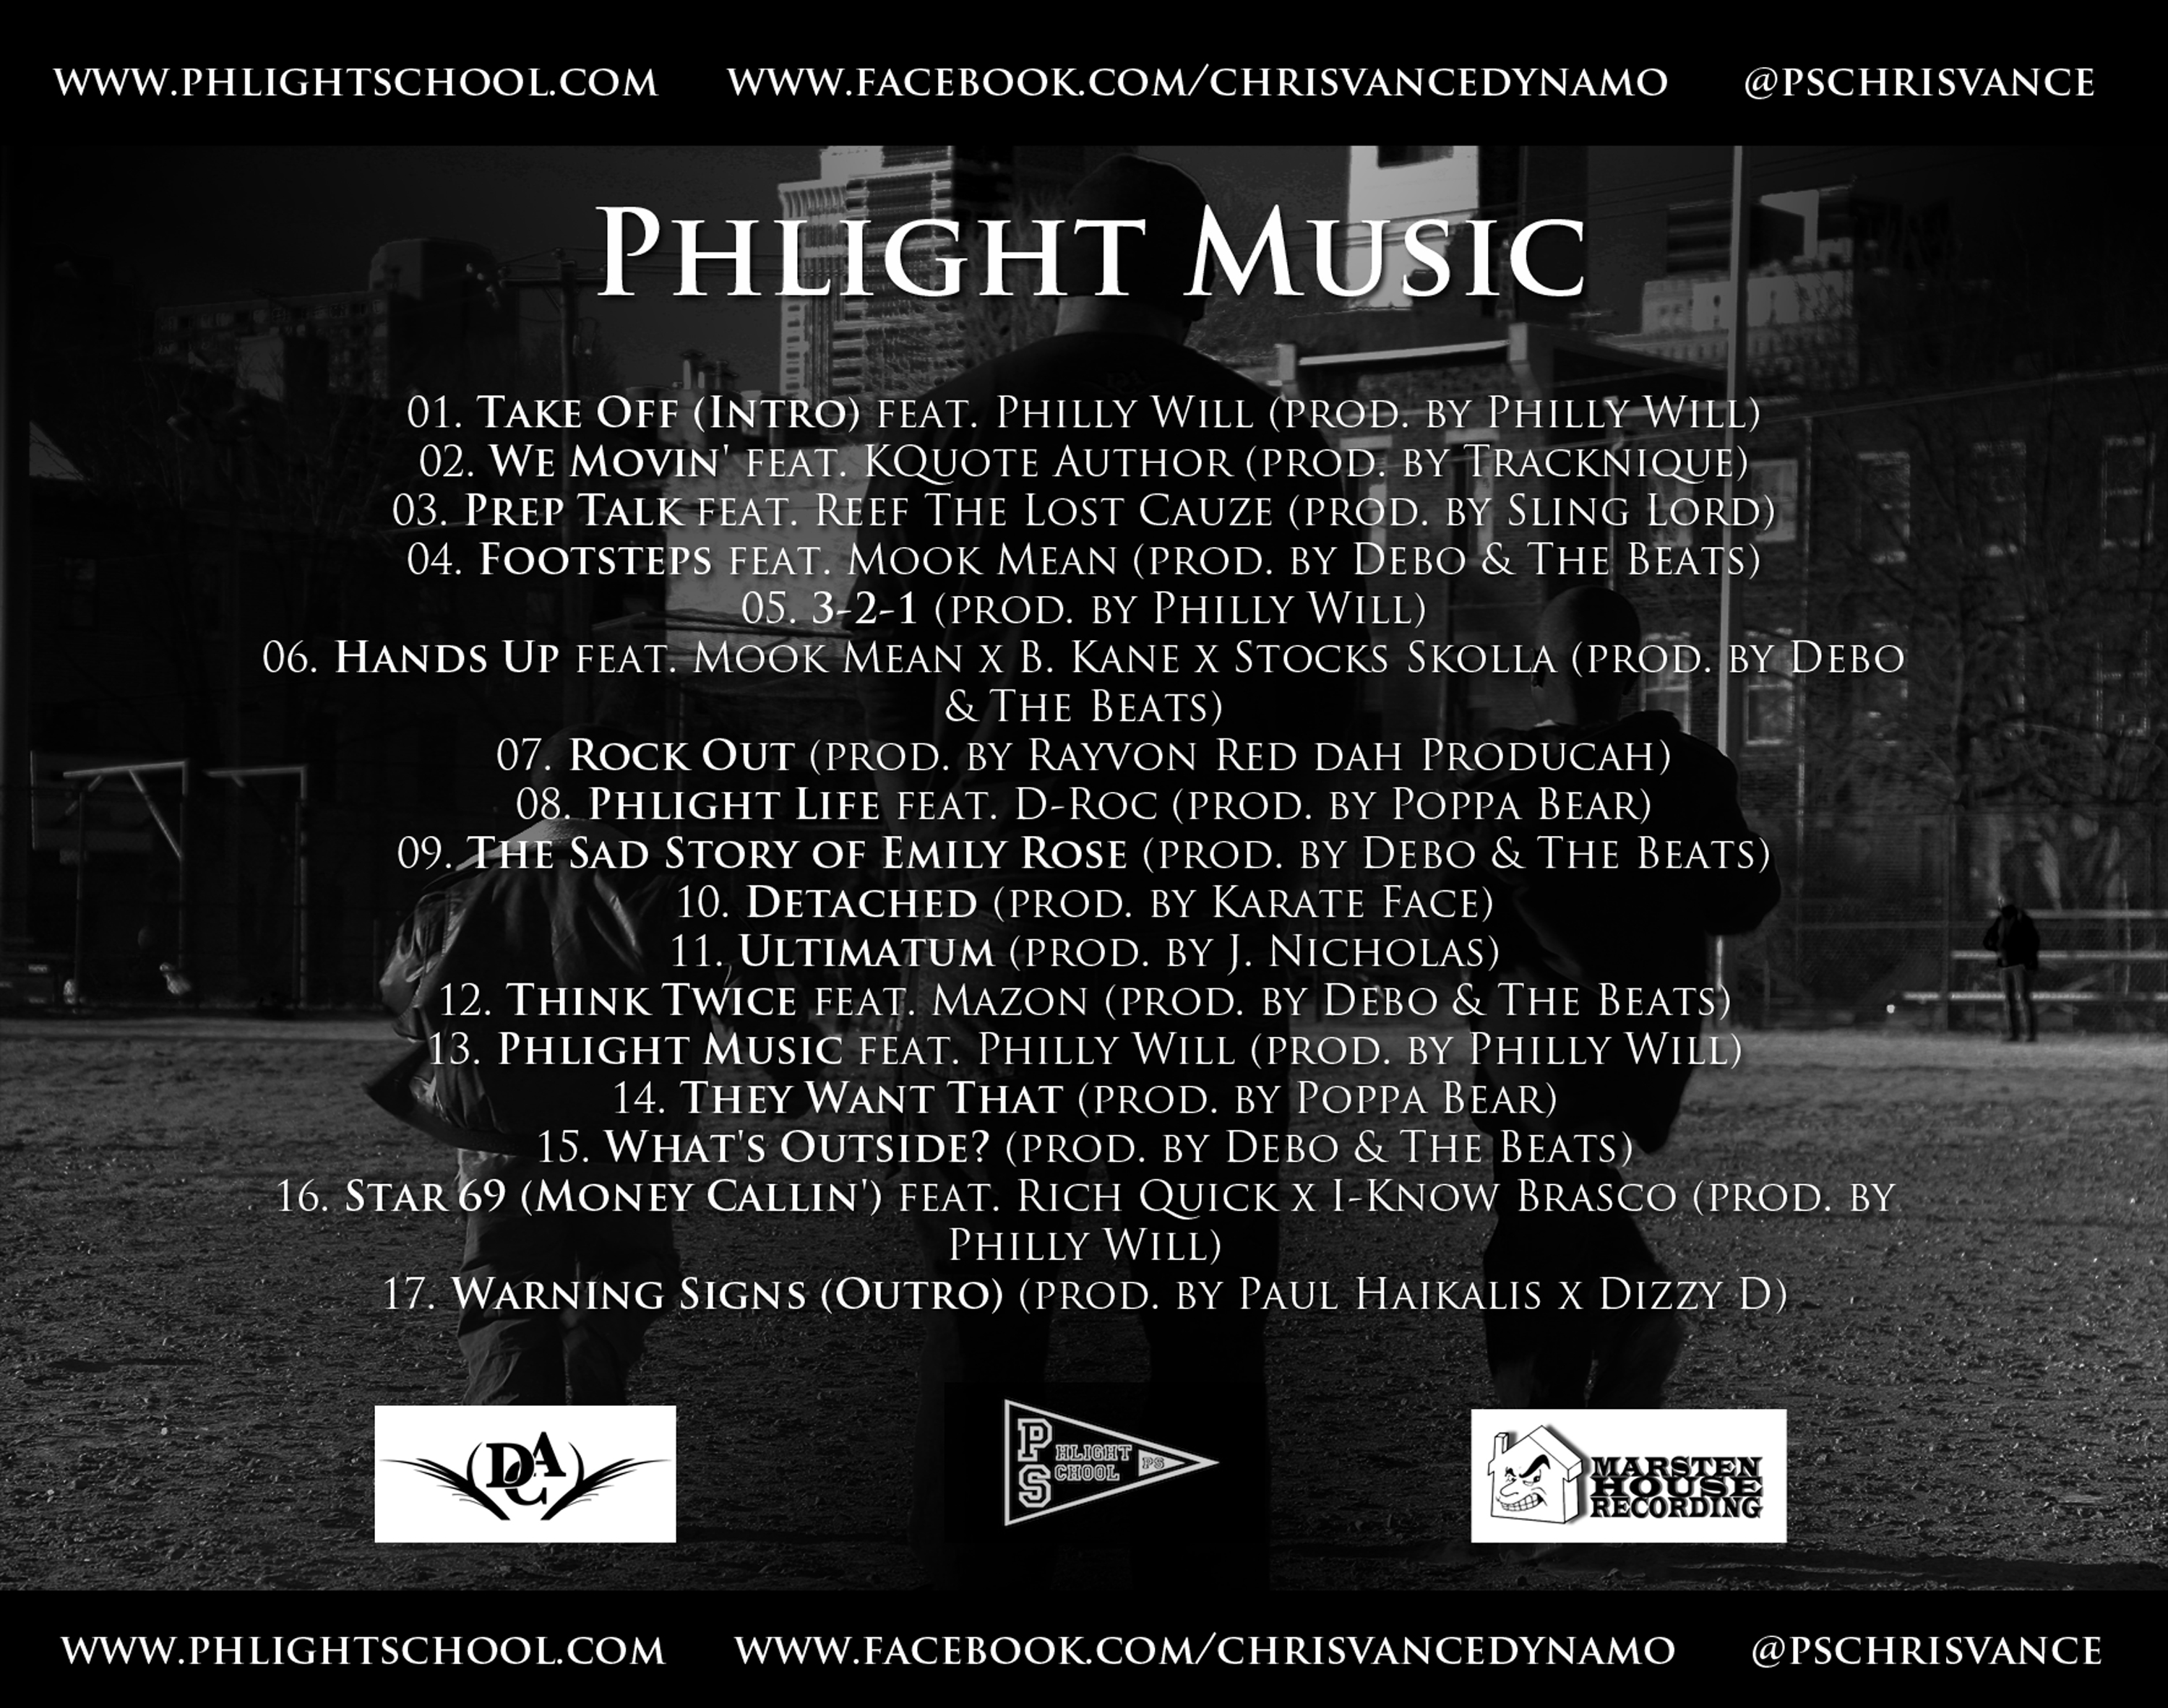 Phlight-Music-Tracklist-1 Chris Vance (@psChrisVance) - Phlight Music (Mixtape)  